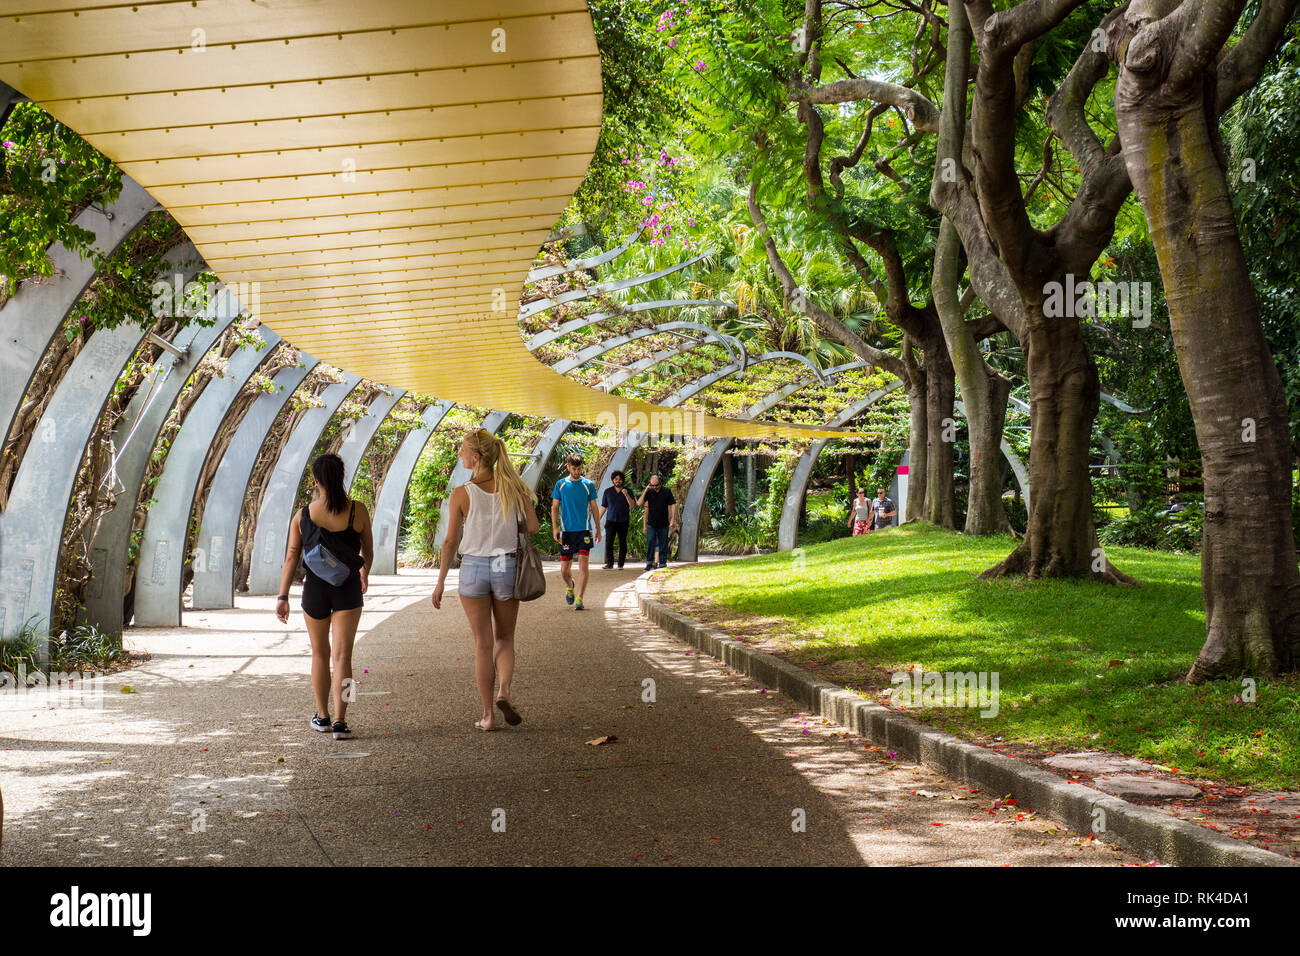 Brisbane city and lifestyle Stock Photo - Alamy